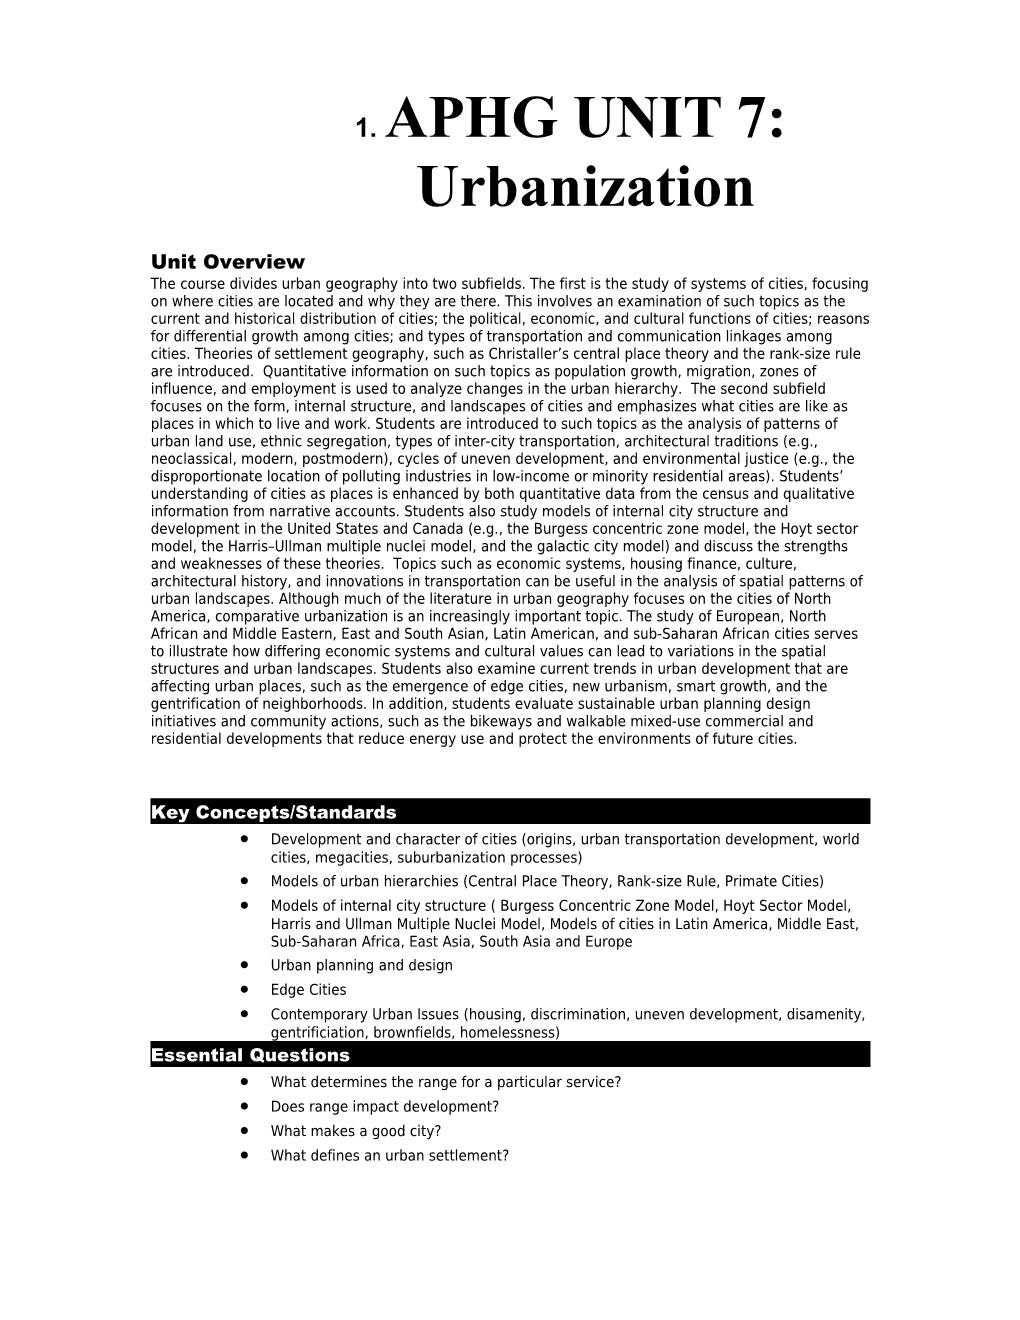 APHG UNIT 7: Urbanization